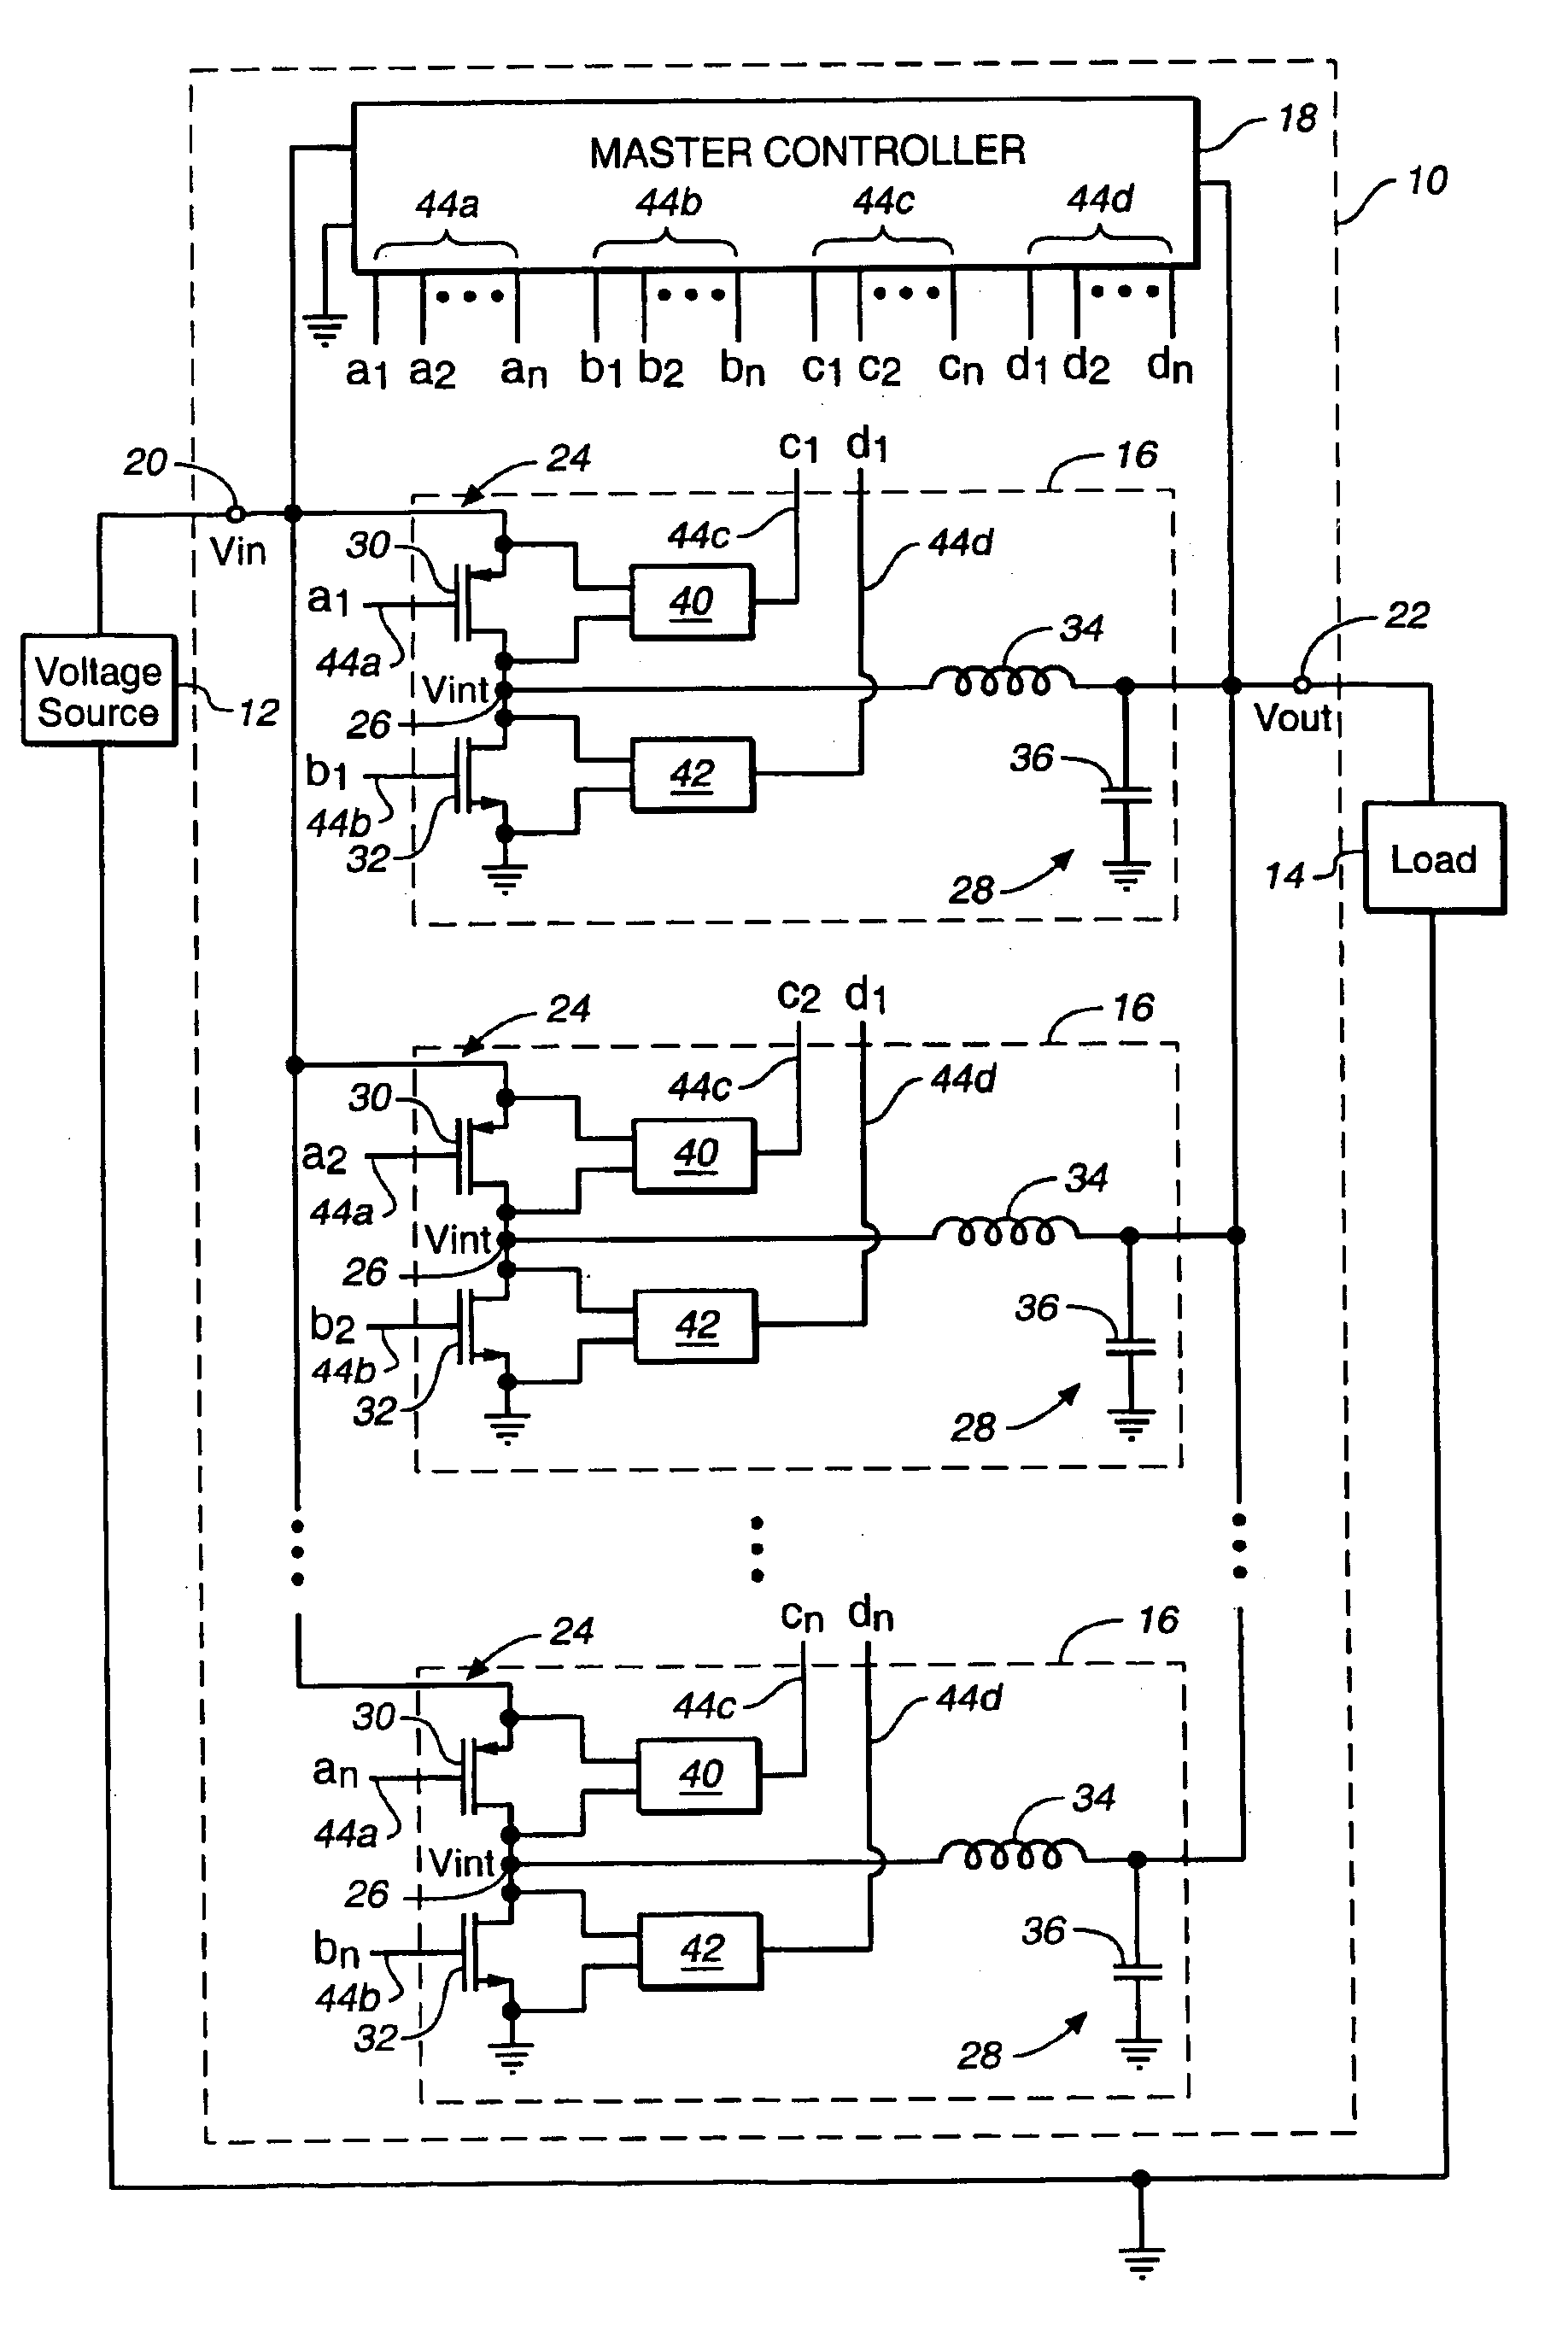 Digital voltage regulator using current control